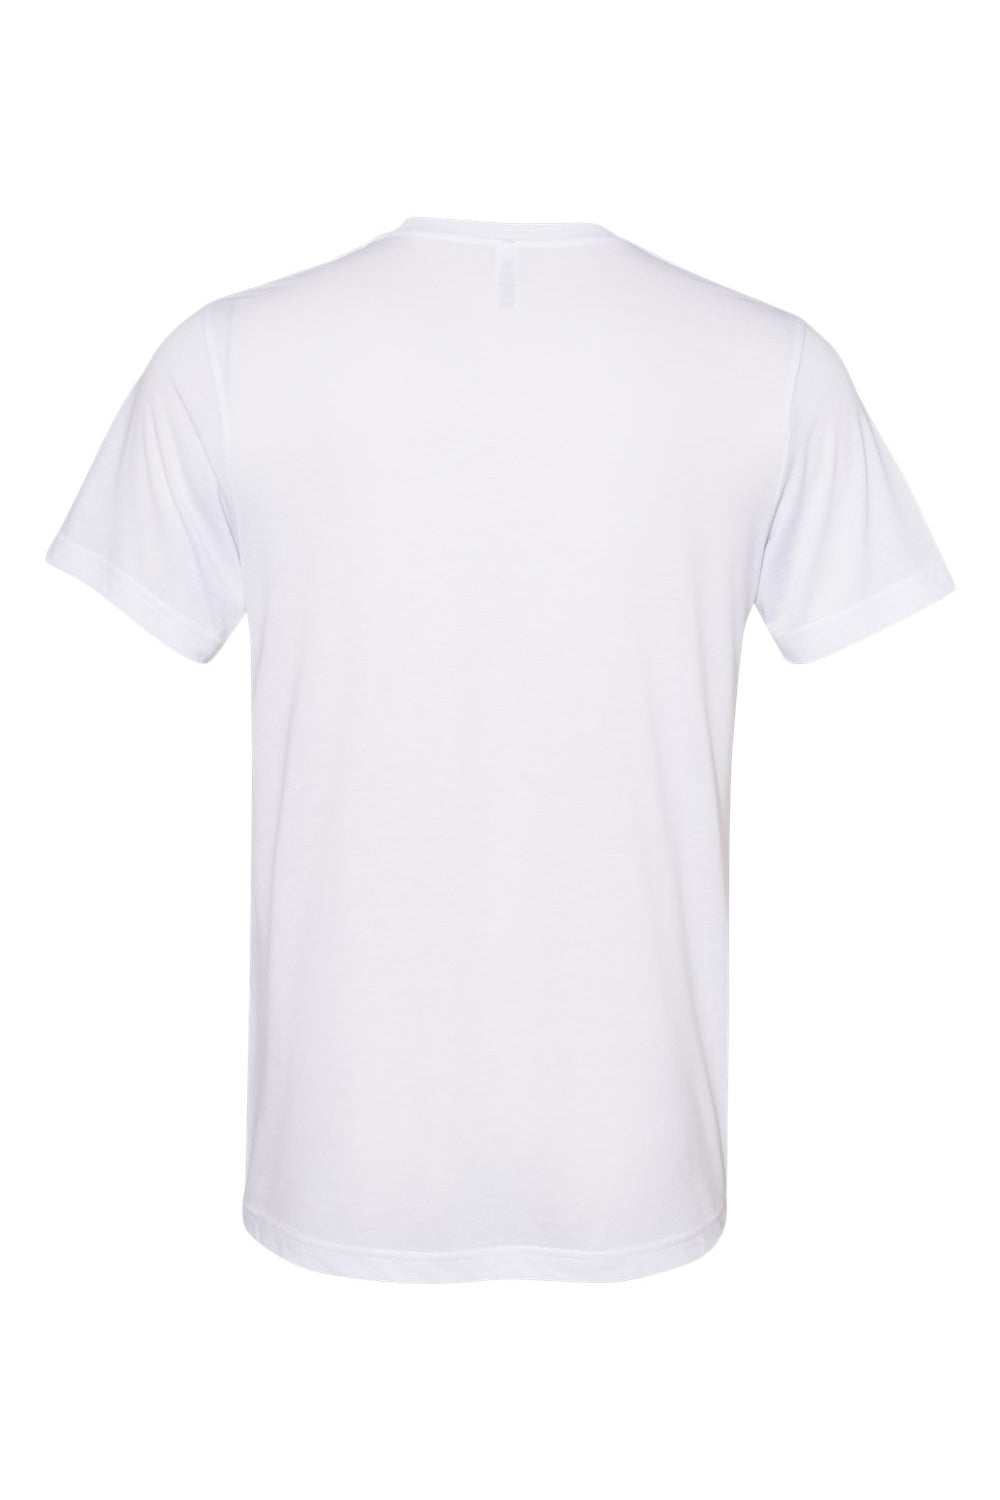 Bella + Canvas 3880C/3880 Mens Short Sleeve Crewneck T-Shirt White Flat Back